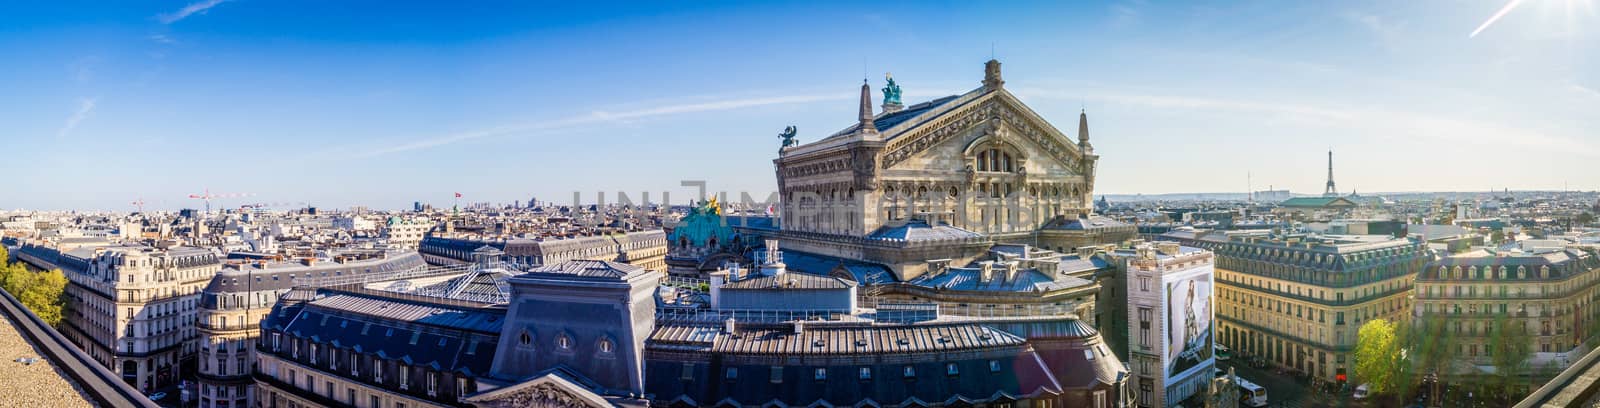 Panorama of Paris roofs by bignoub